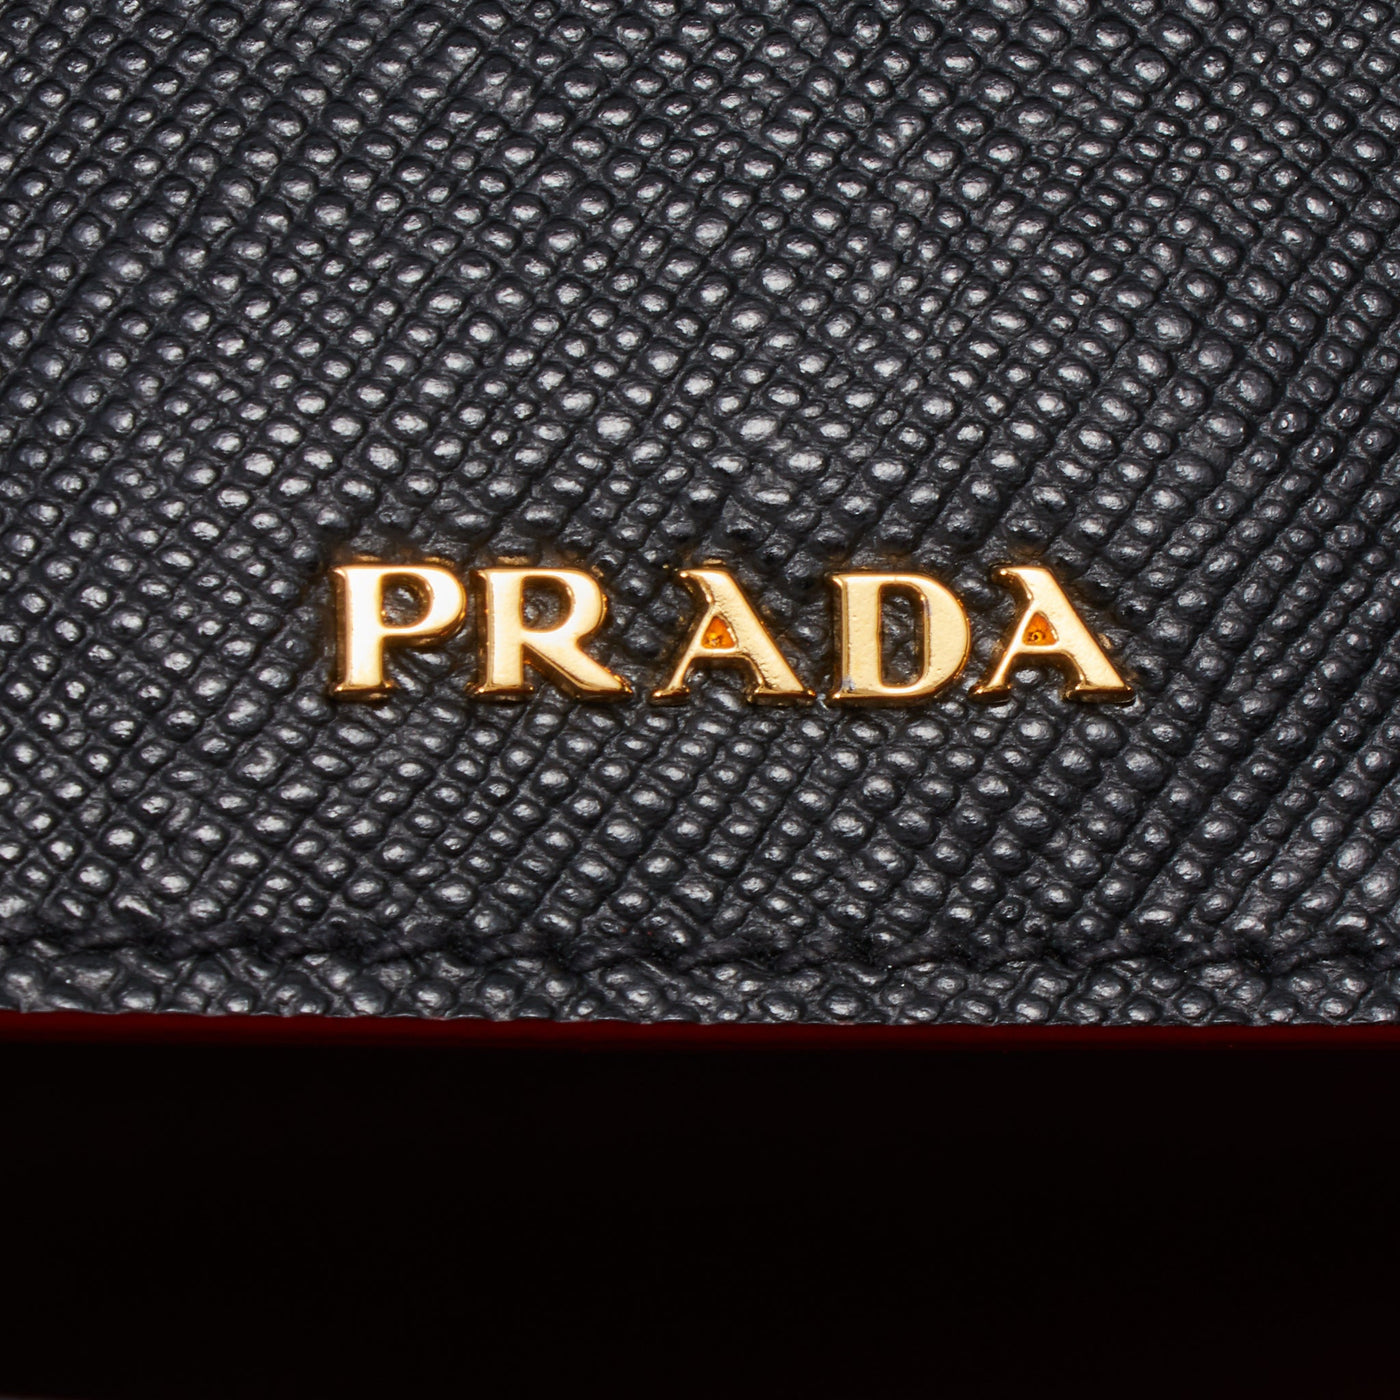 【PRADA・プラダ】バッグ・ショルダーバッグ/サフィアーノキュイール/ブラック/PR220013/ハンドバッグ/USED